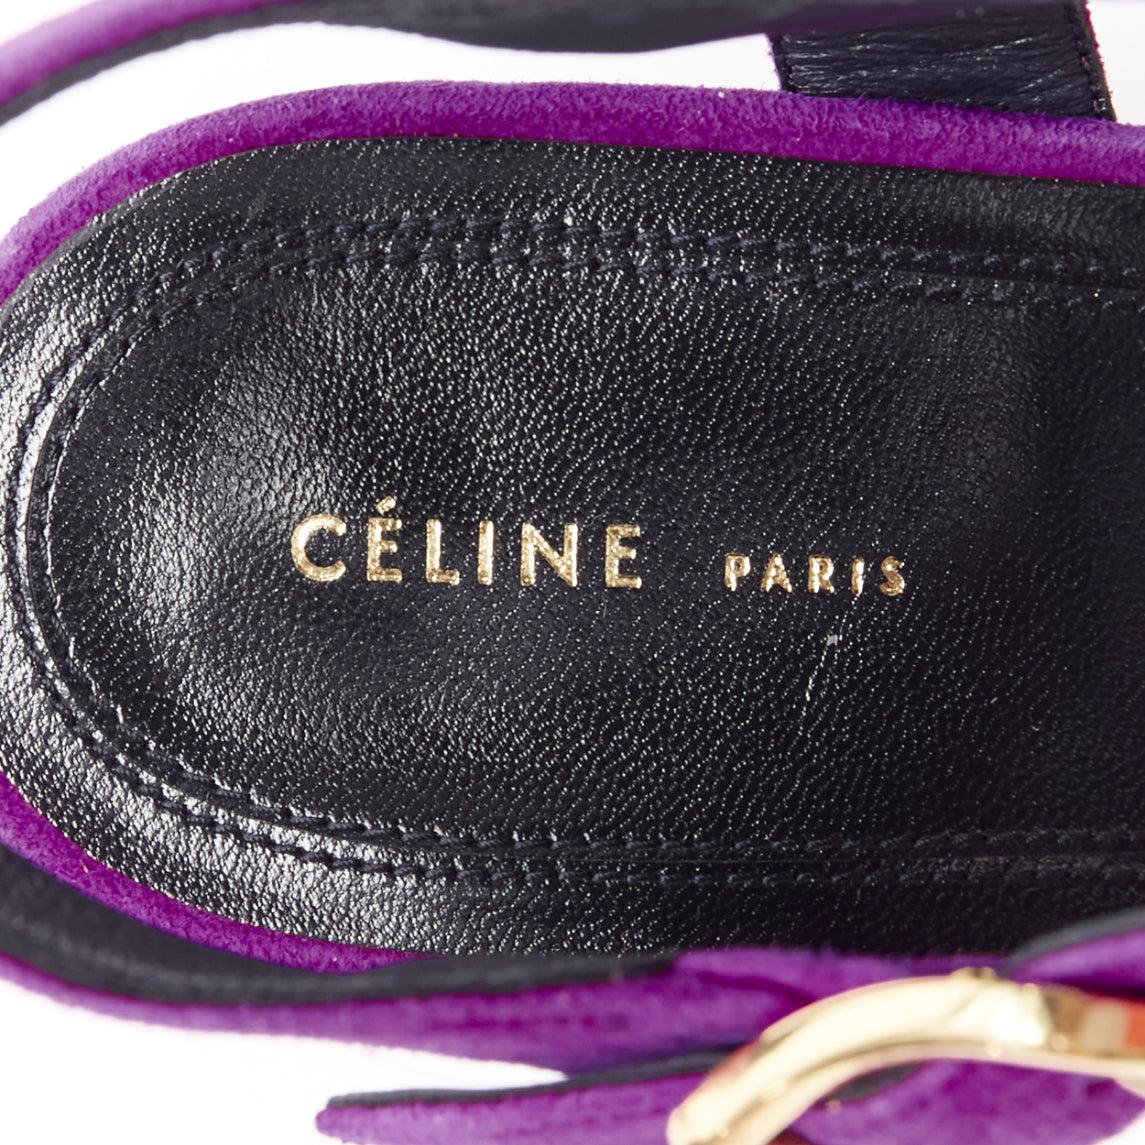 OLD CELINE Phoebe Philo purple suede gold buckle strappy sandal heels EU38 2